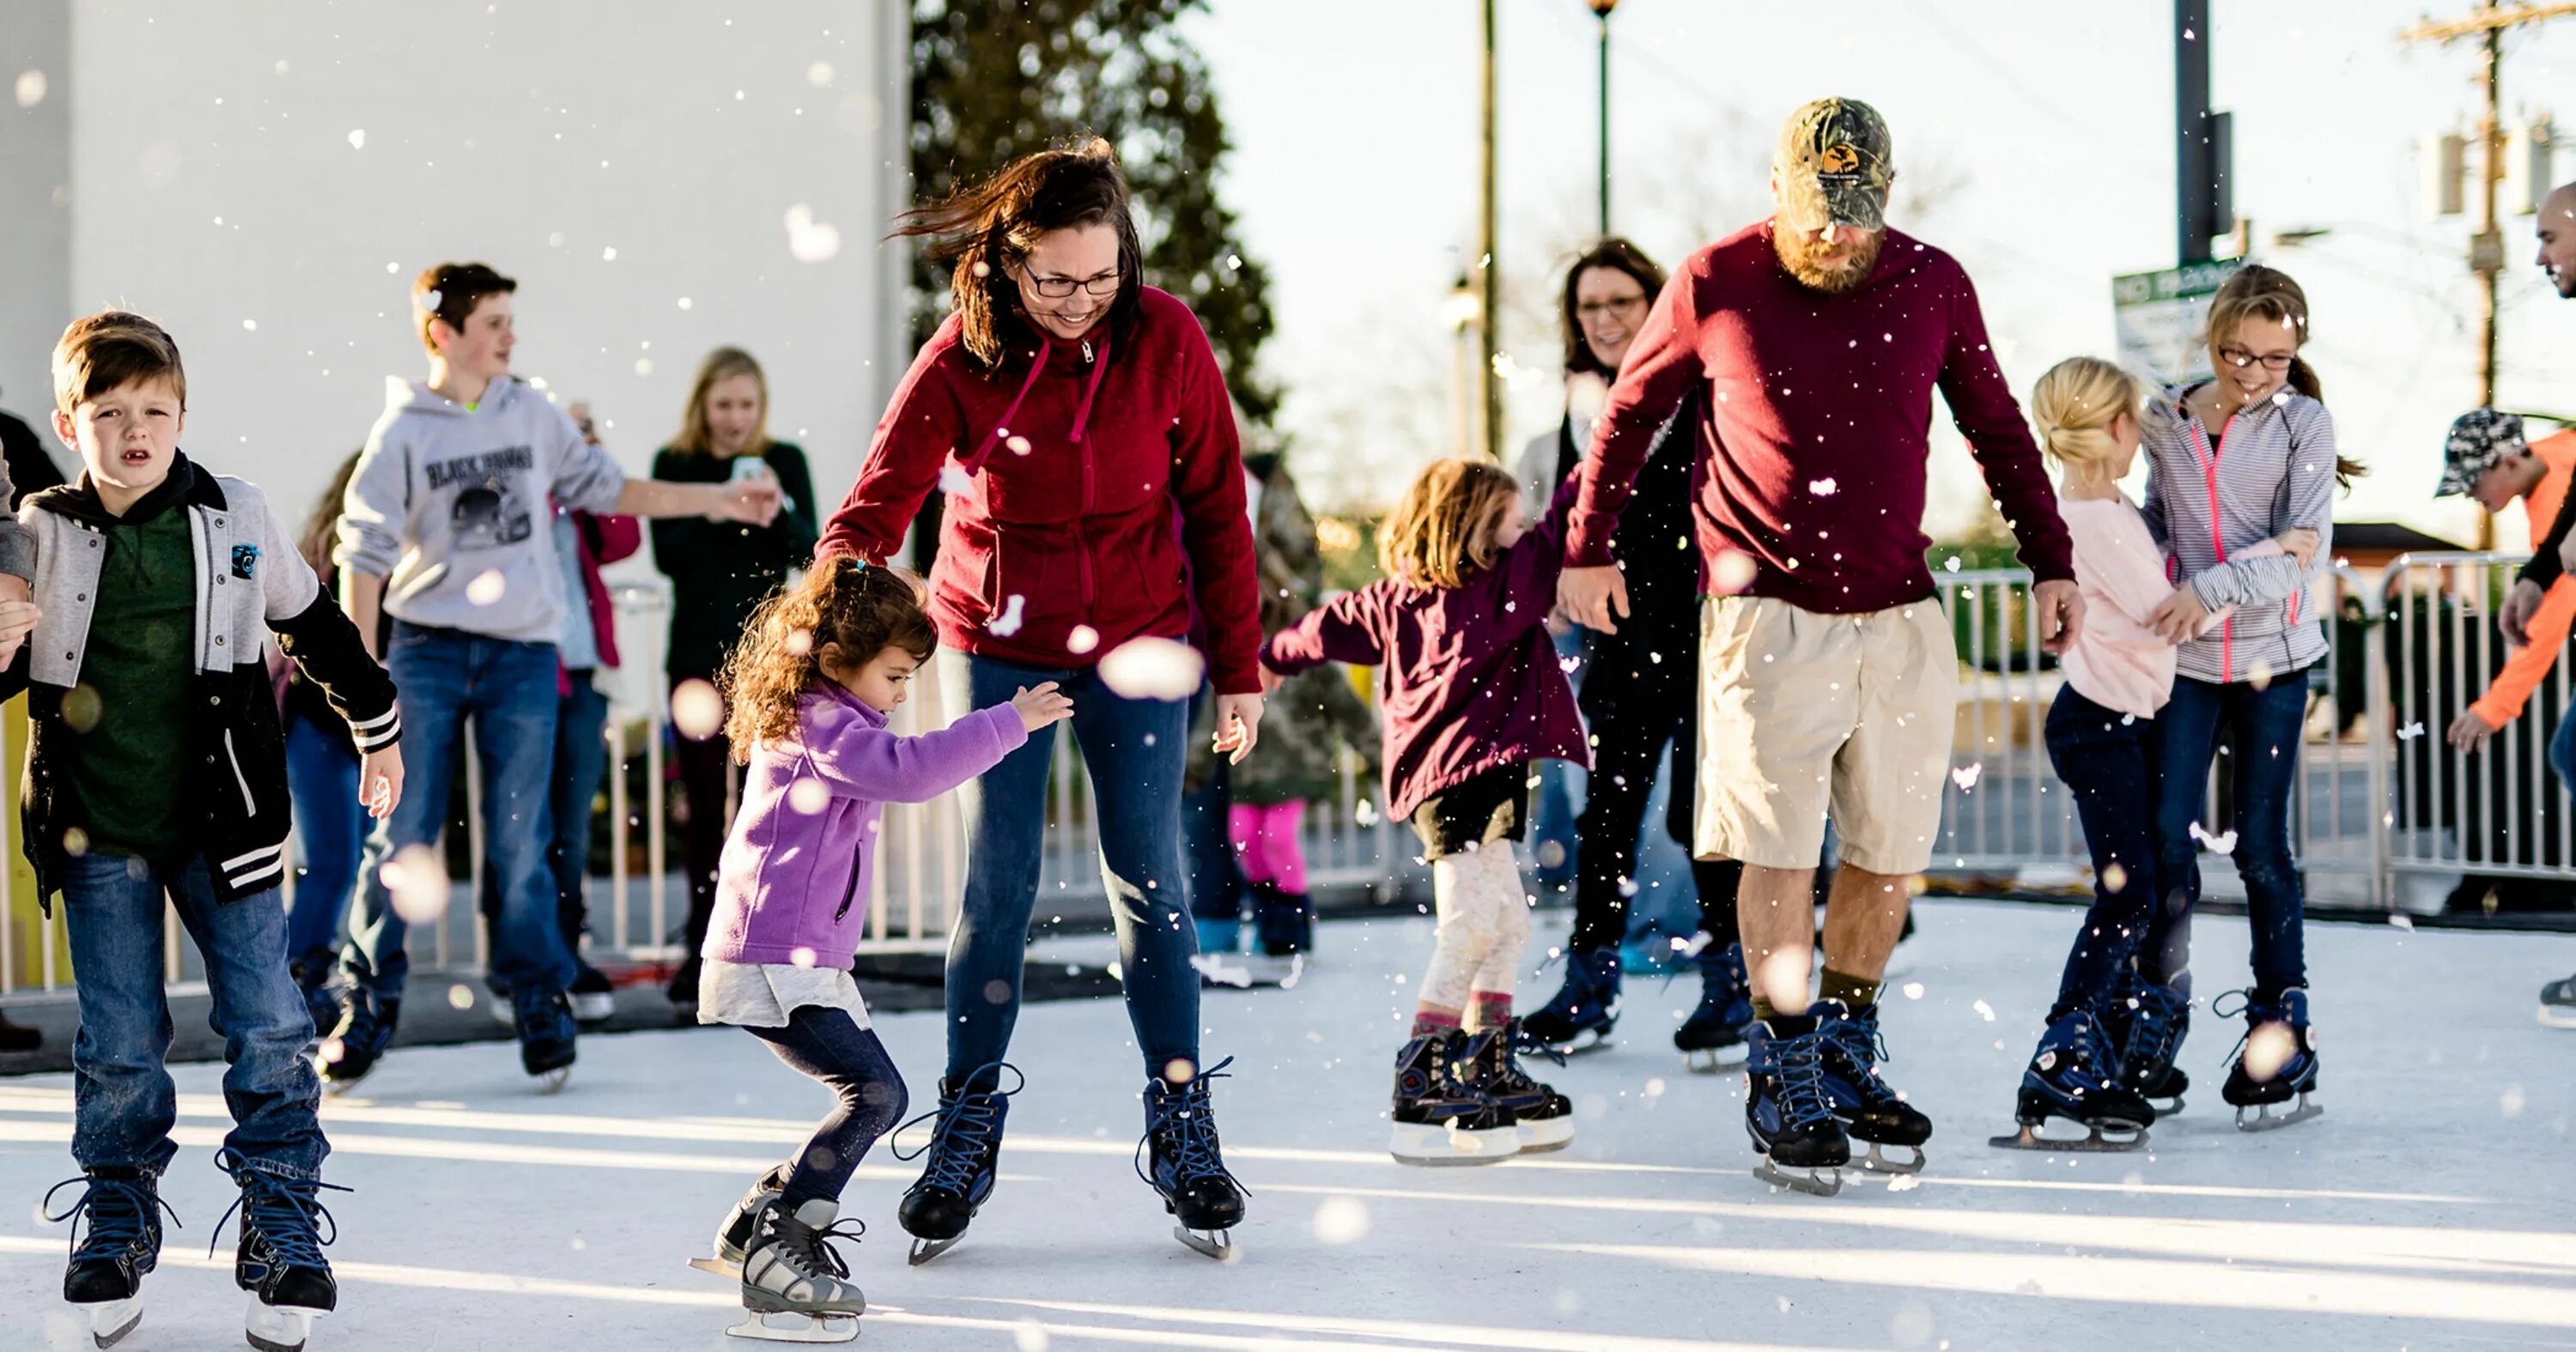 На коньках на улице. Семья на коньках. Люди на коньках. Хобби каток.